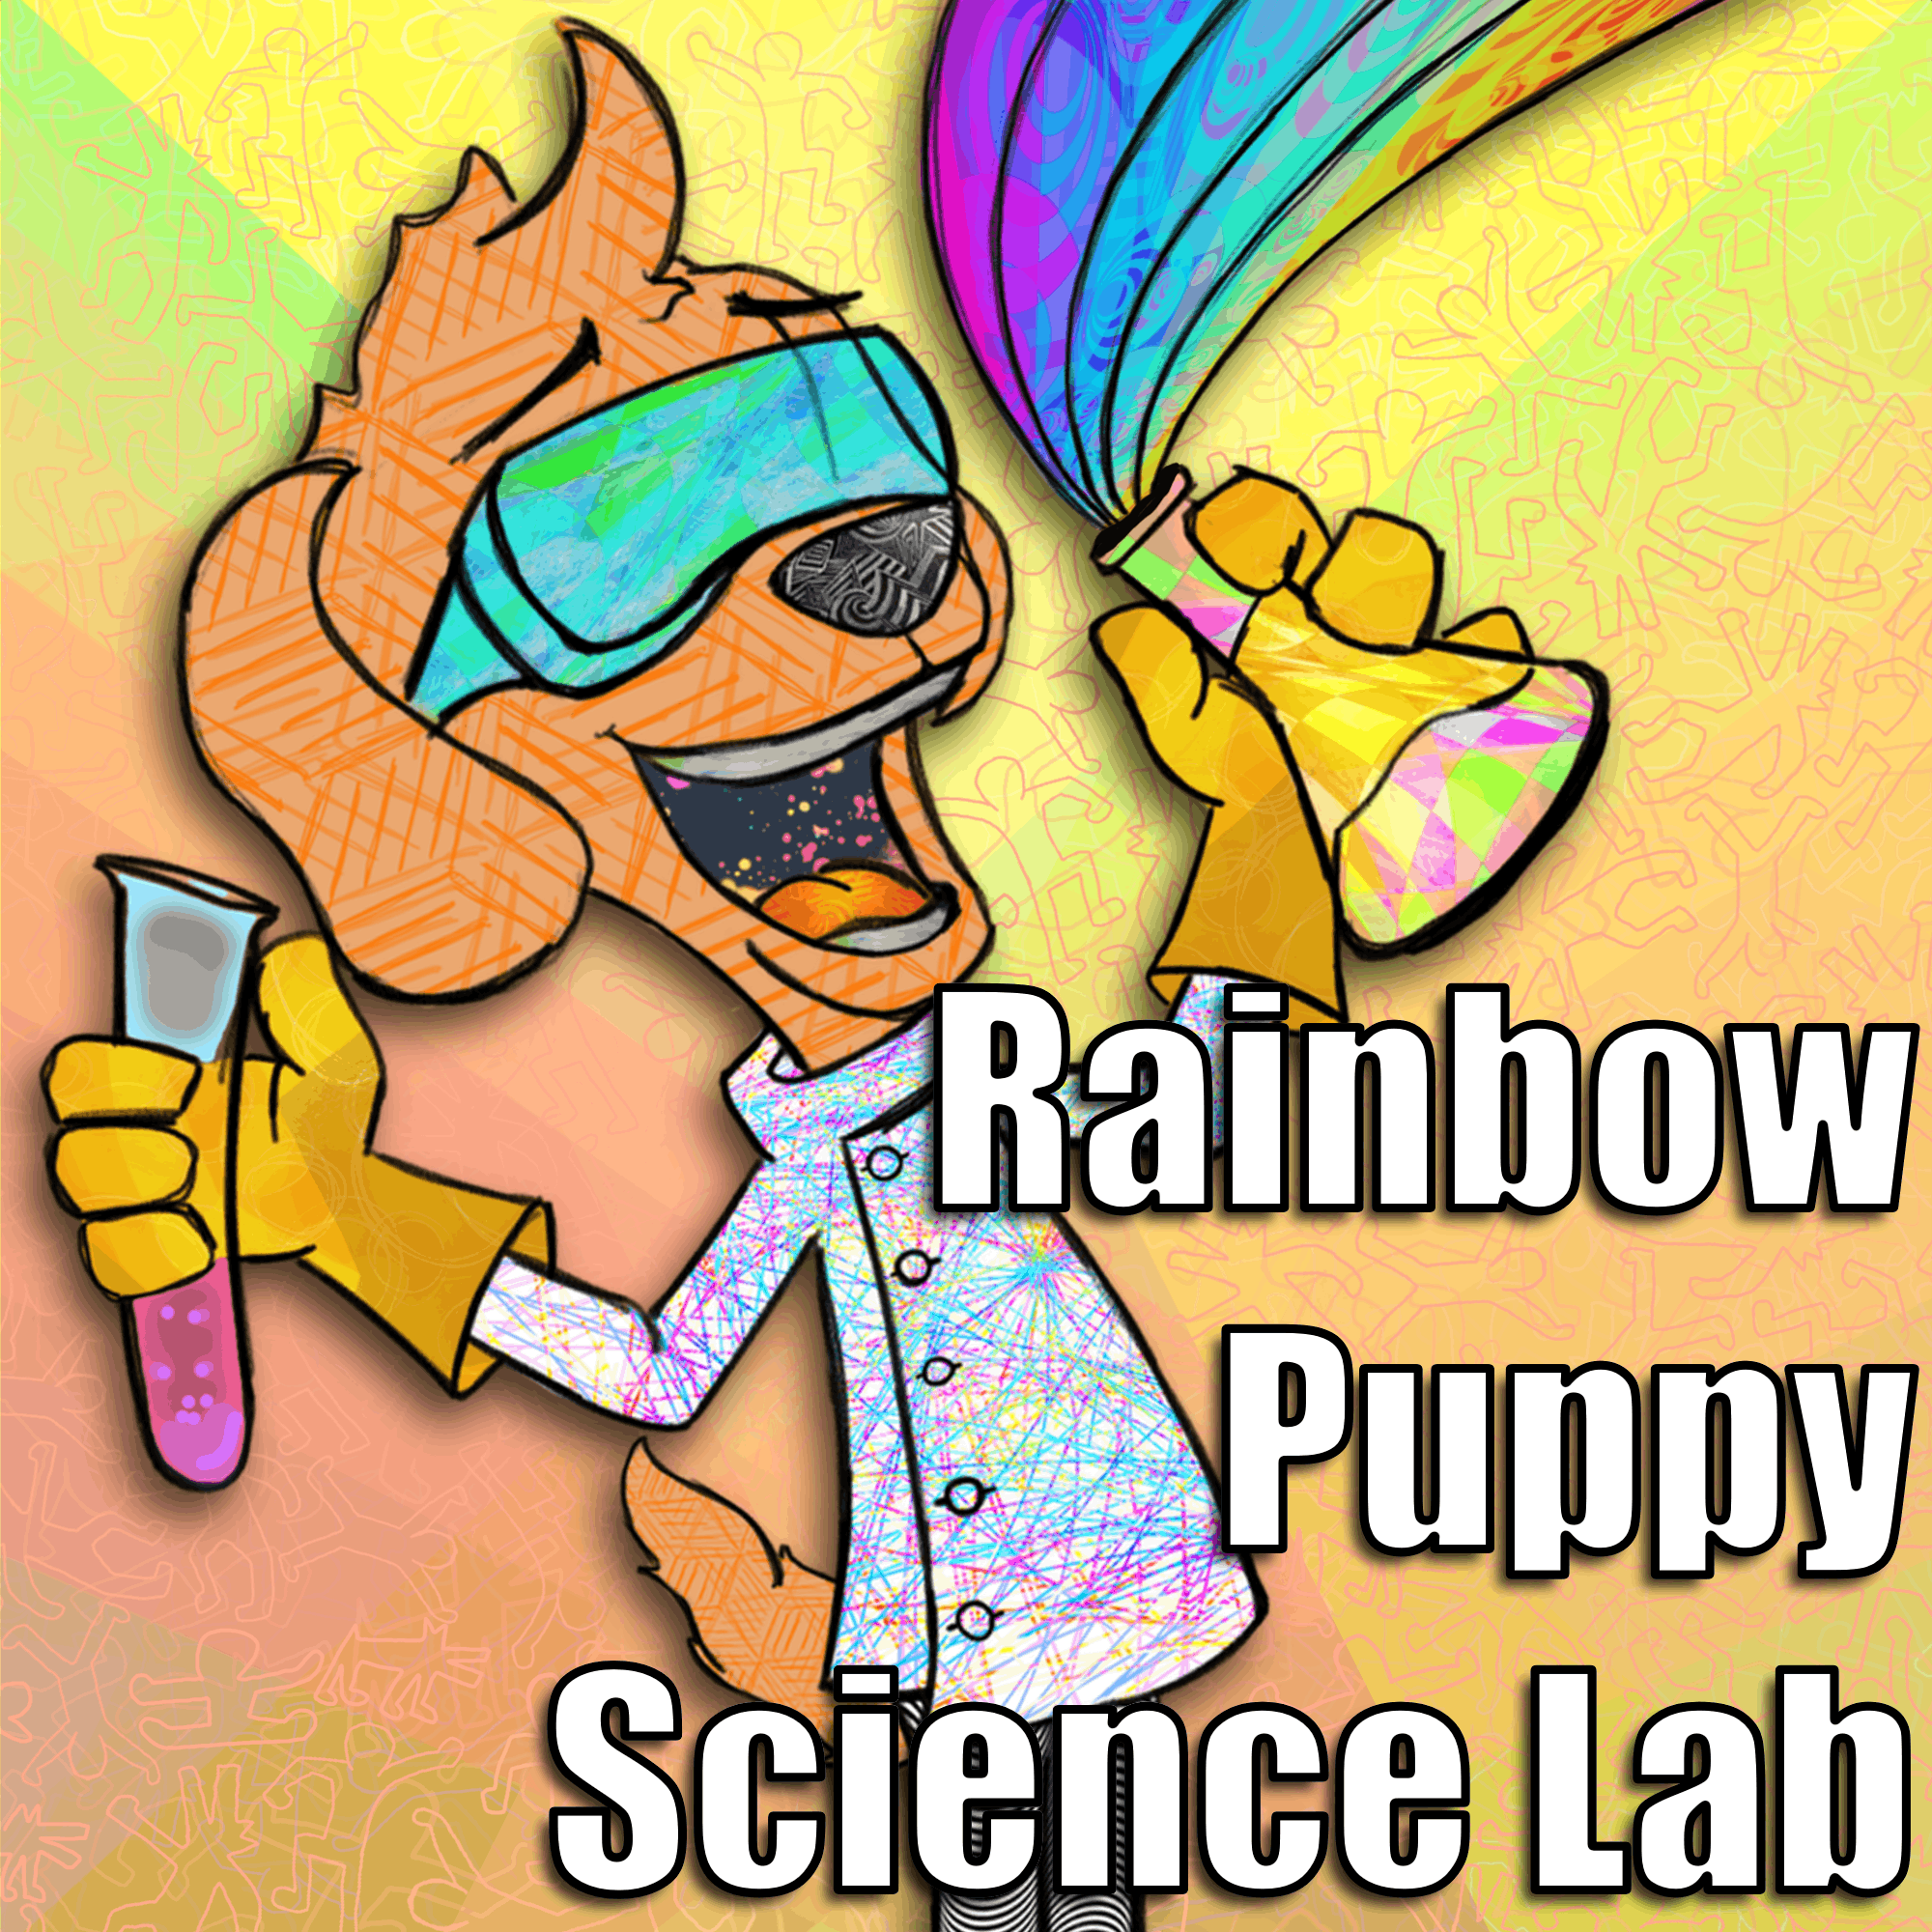 Introducing: Rainbow Puppy Science Lab